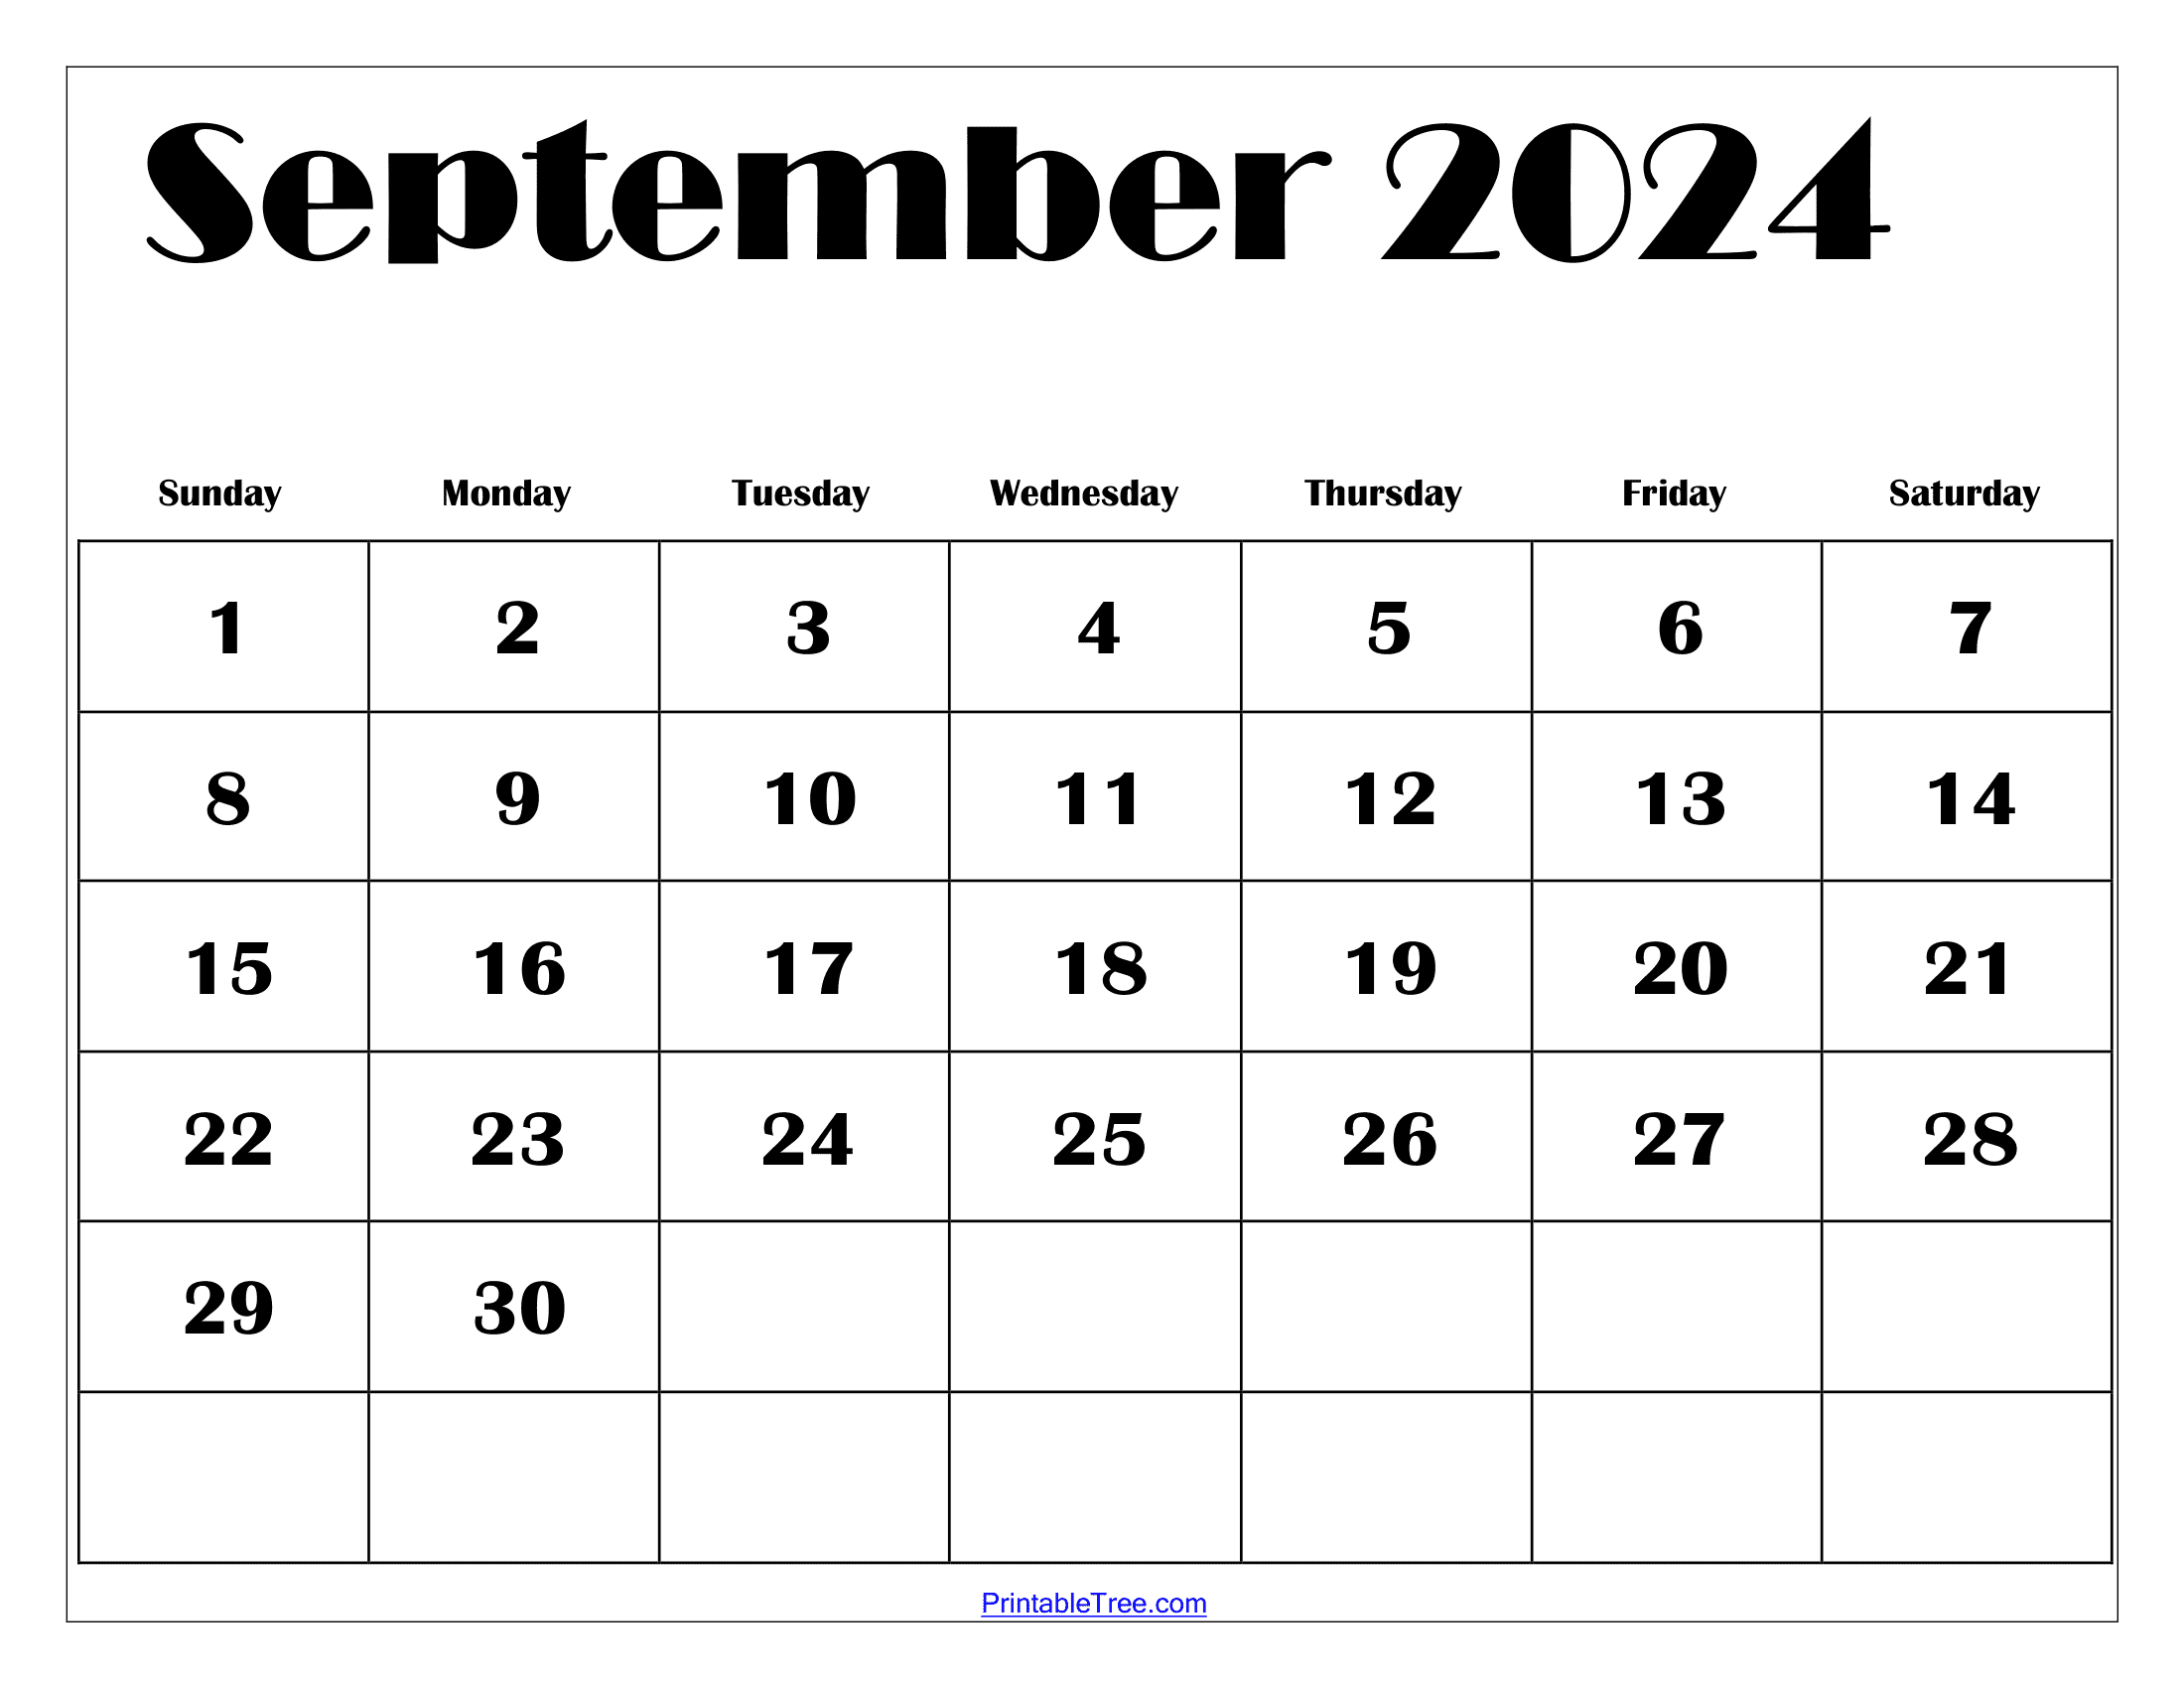 September 2024 Calendar Printable Pdf With Holidays with Free Printable Calendar 2024 Sep Oct Nov